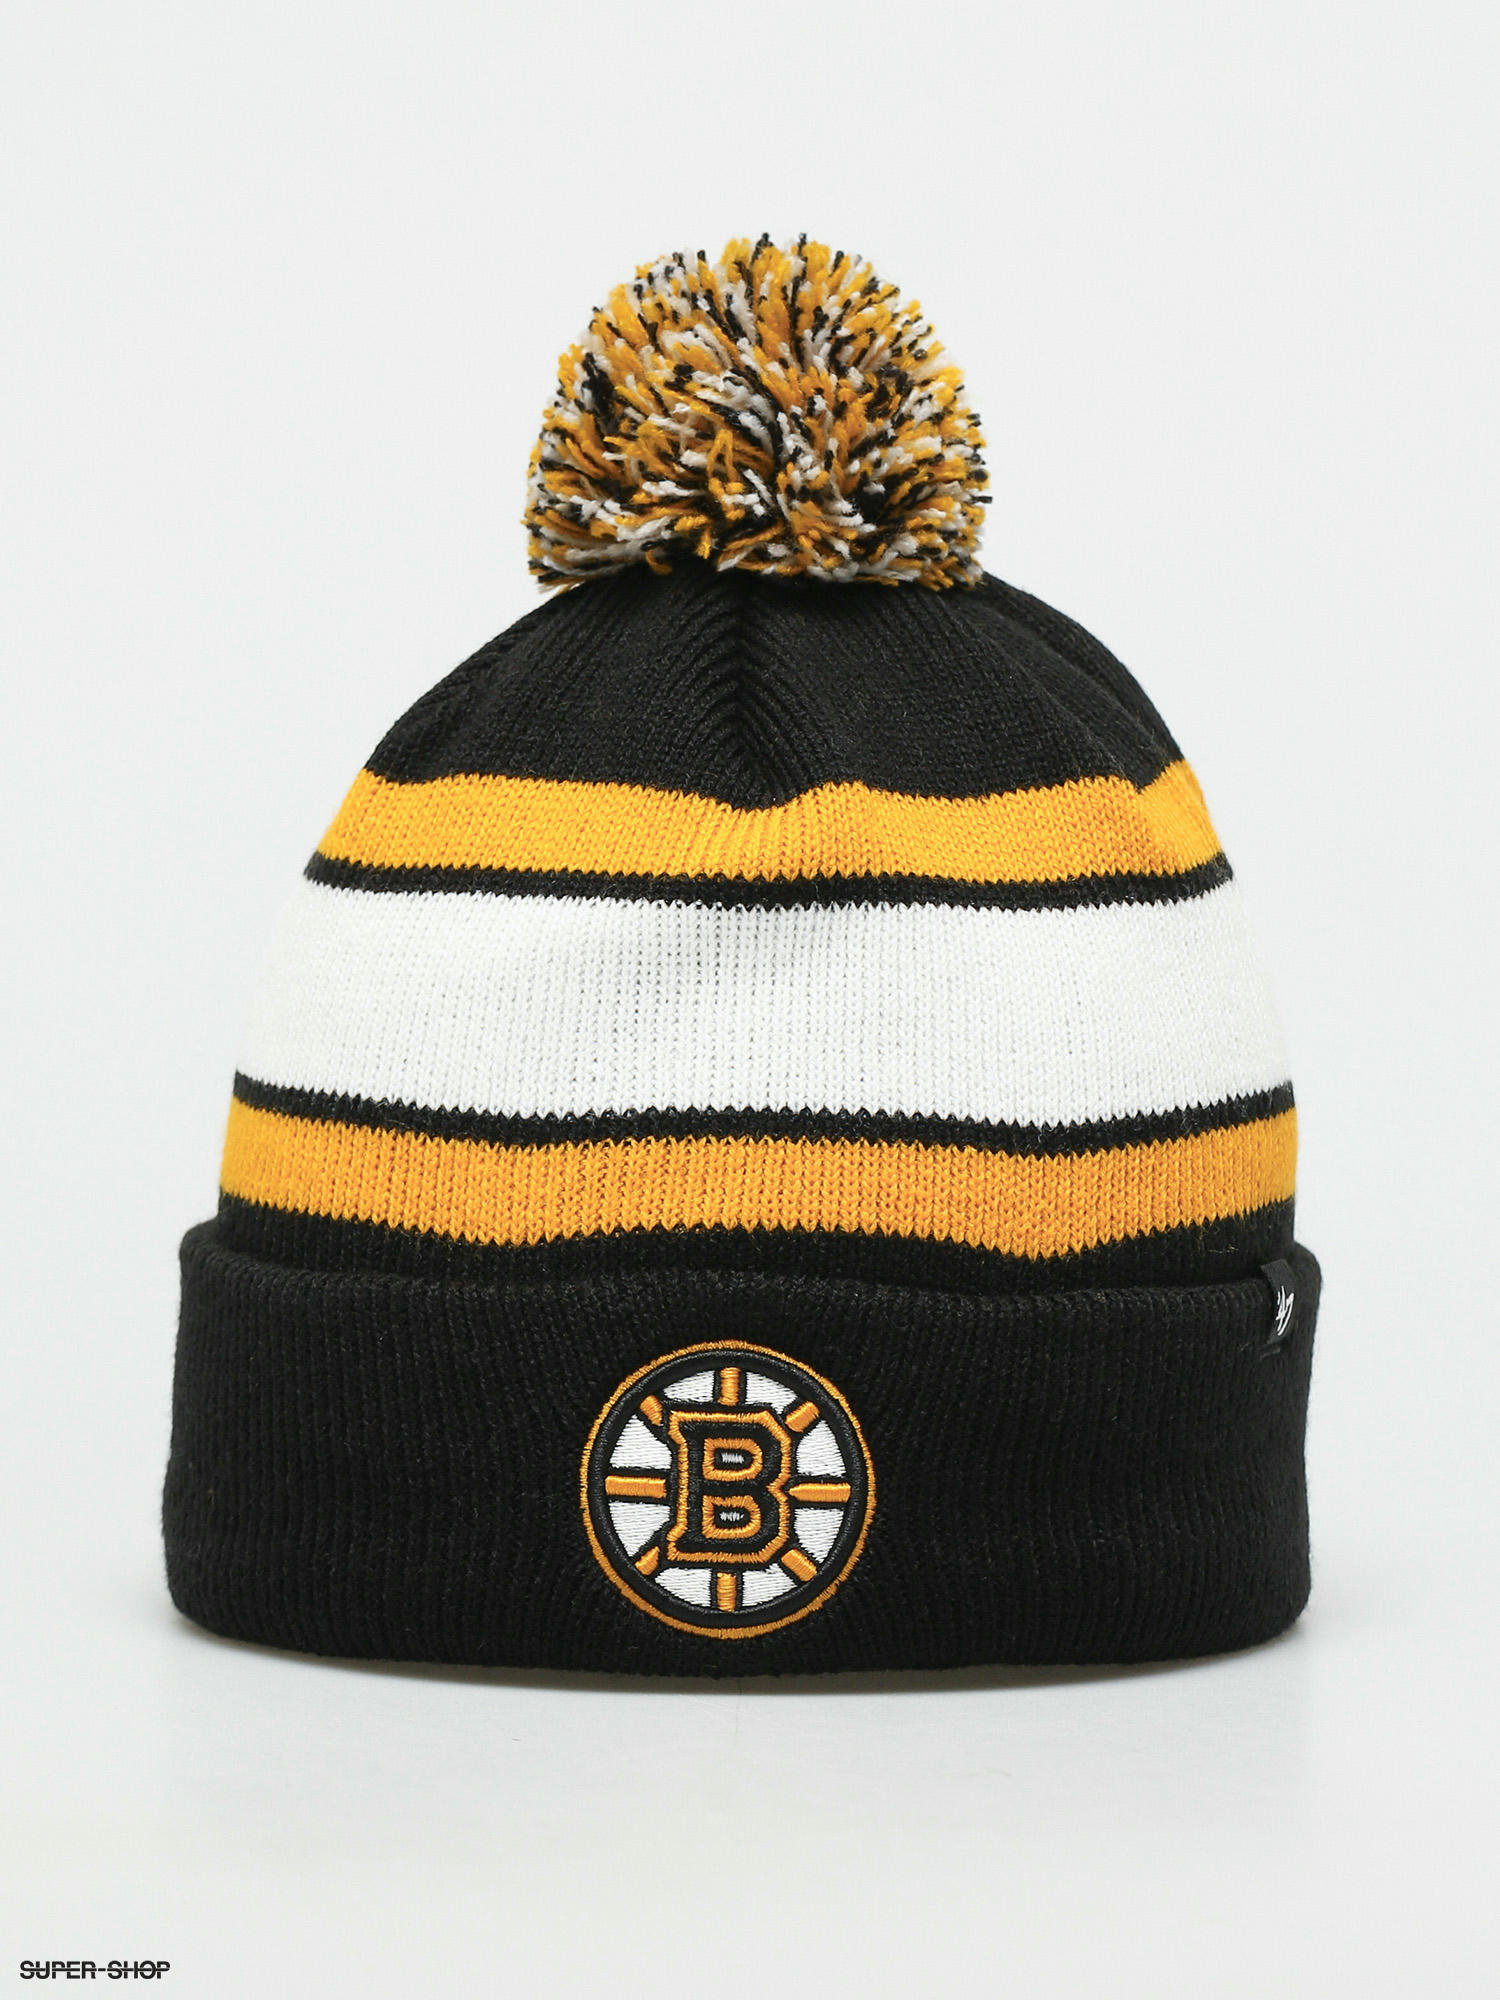 Boston Bruins NHL Yellow Winter Hat